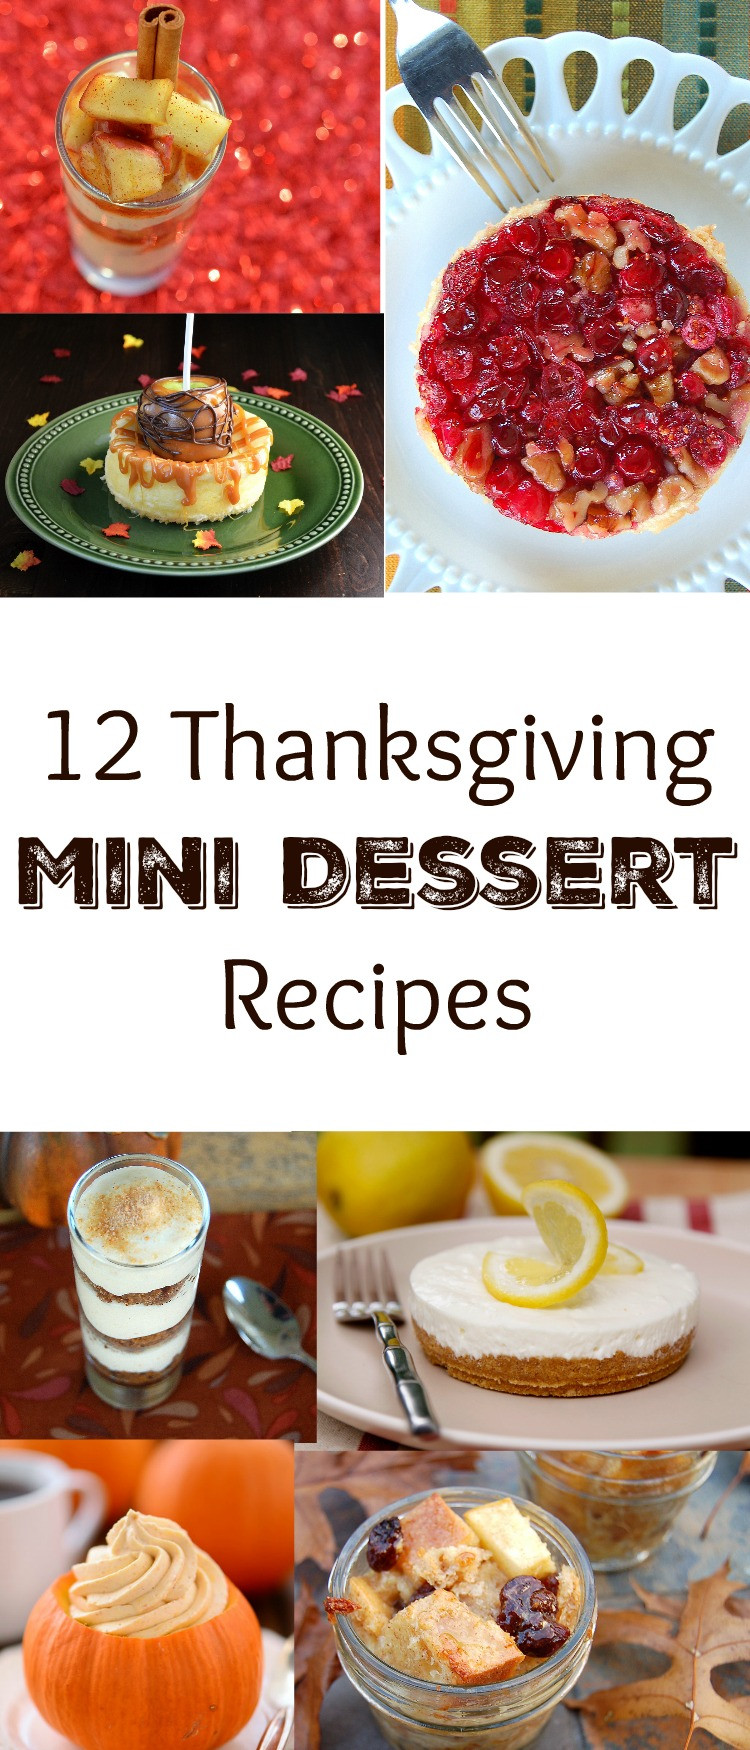 Mini Thanksgiving Desserts
 Mini Thanksgiving Desserts